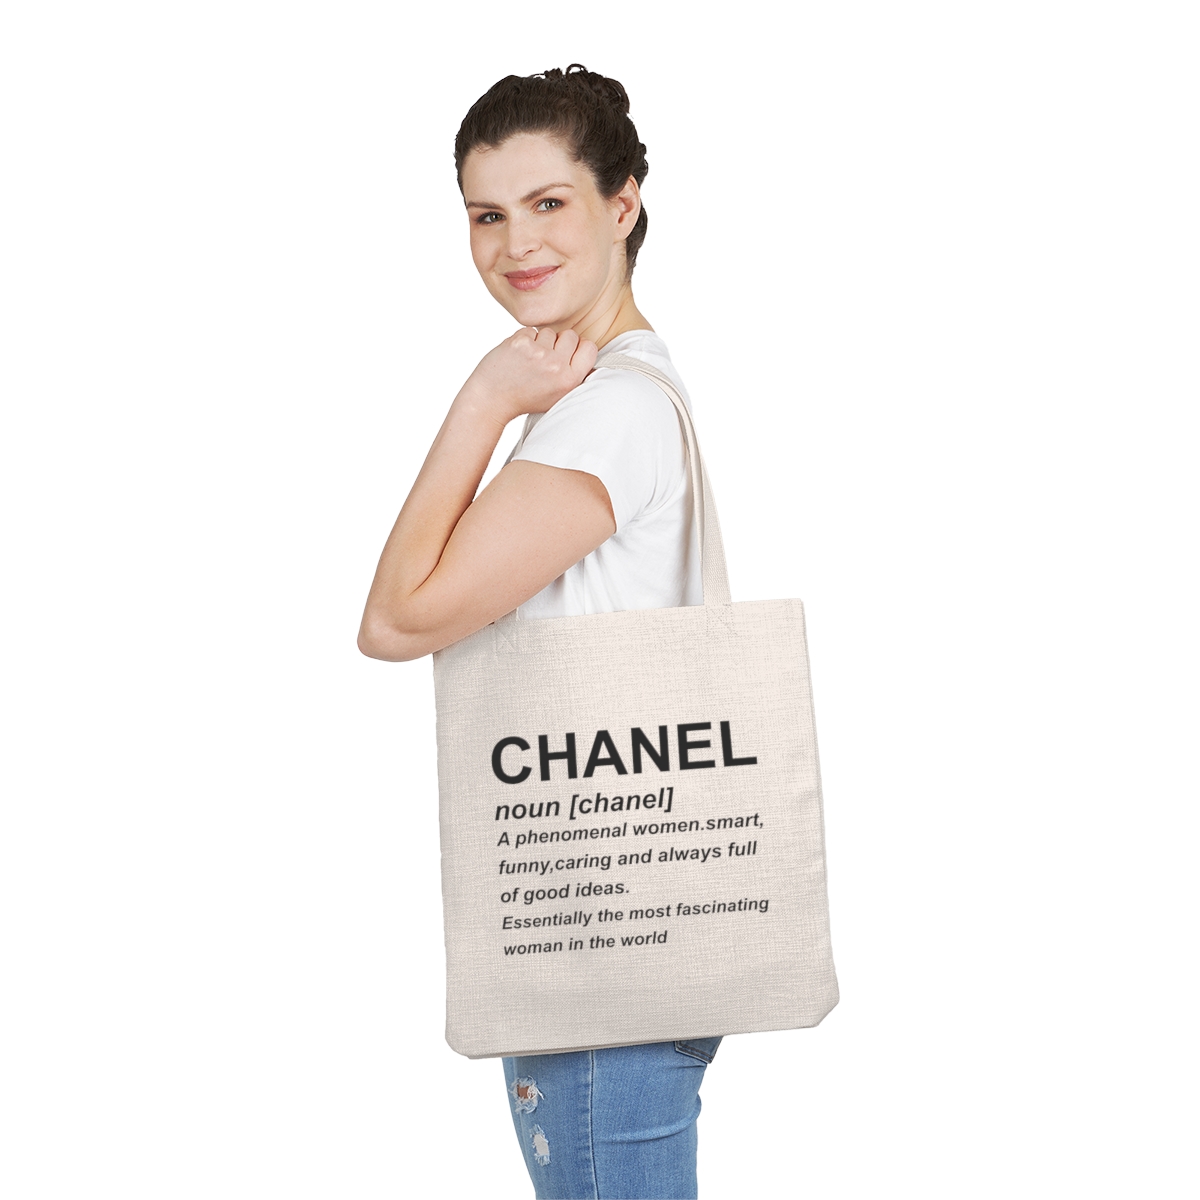 Chanel Woman Tote Bag